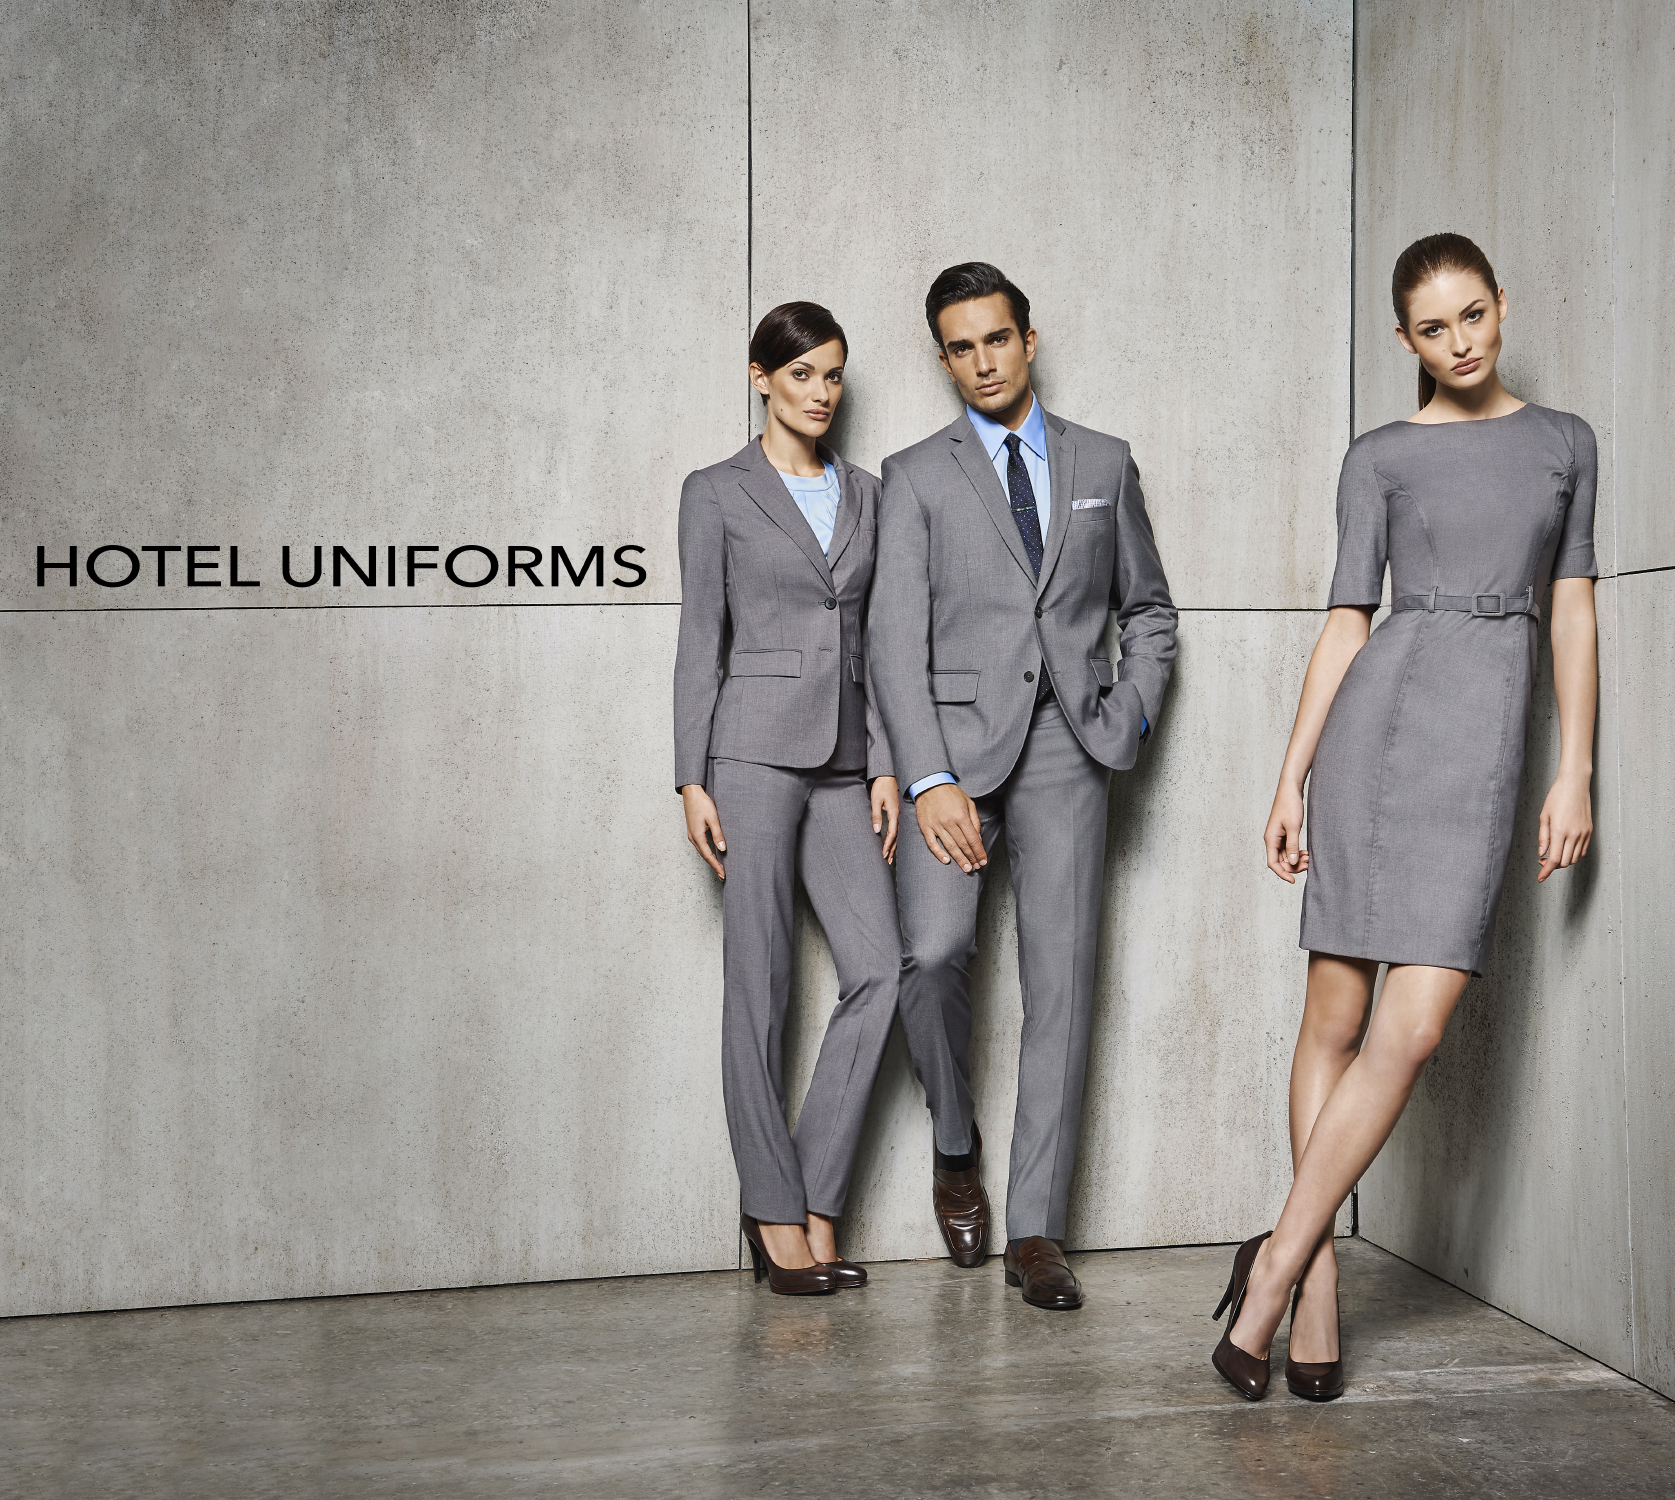 Client @ Brent del Rosario. Fashion Hotel Uniforms